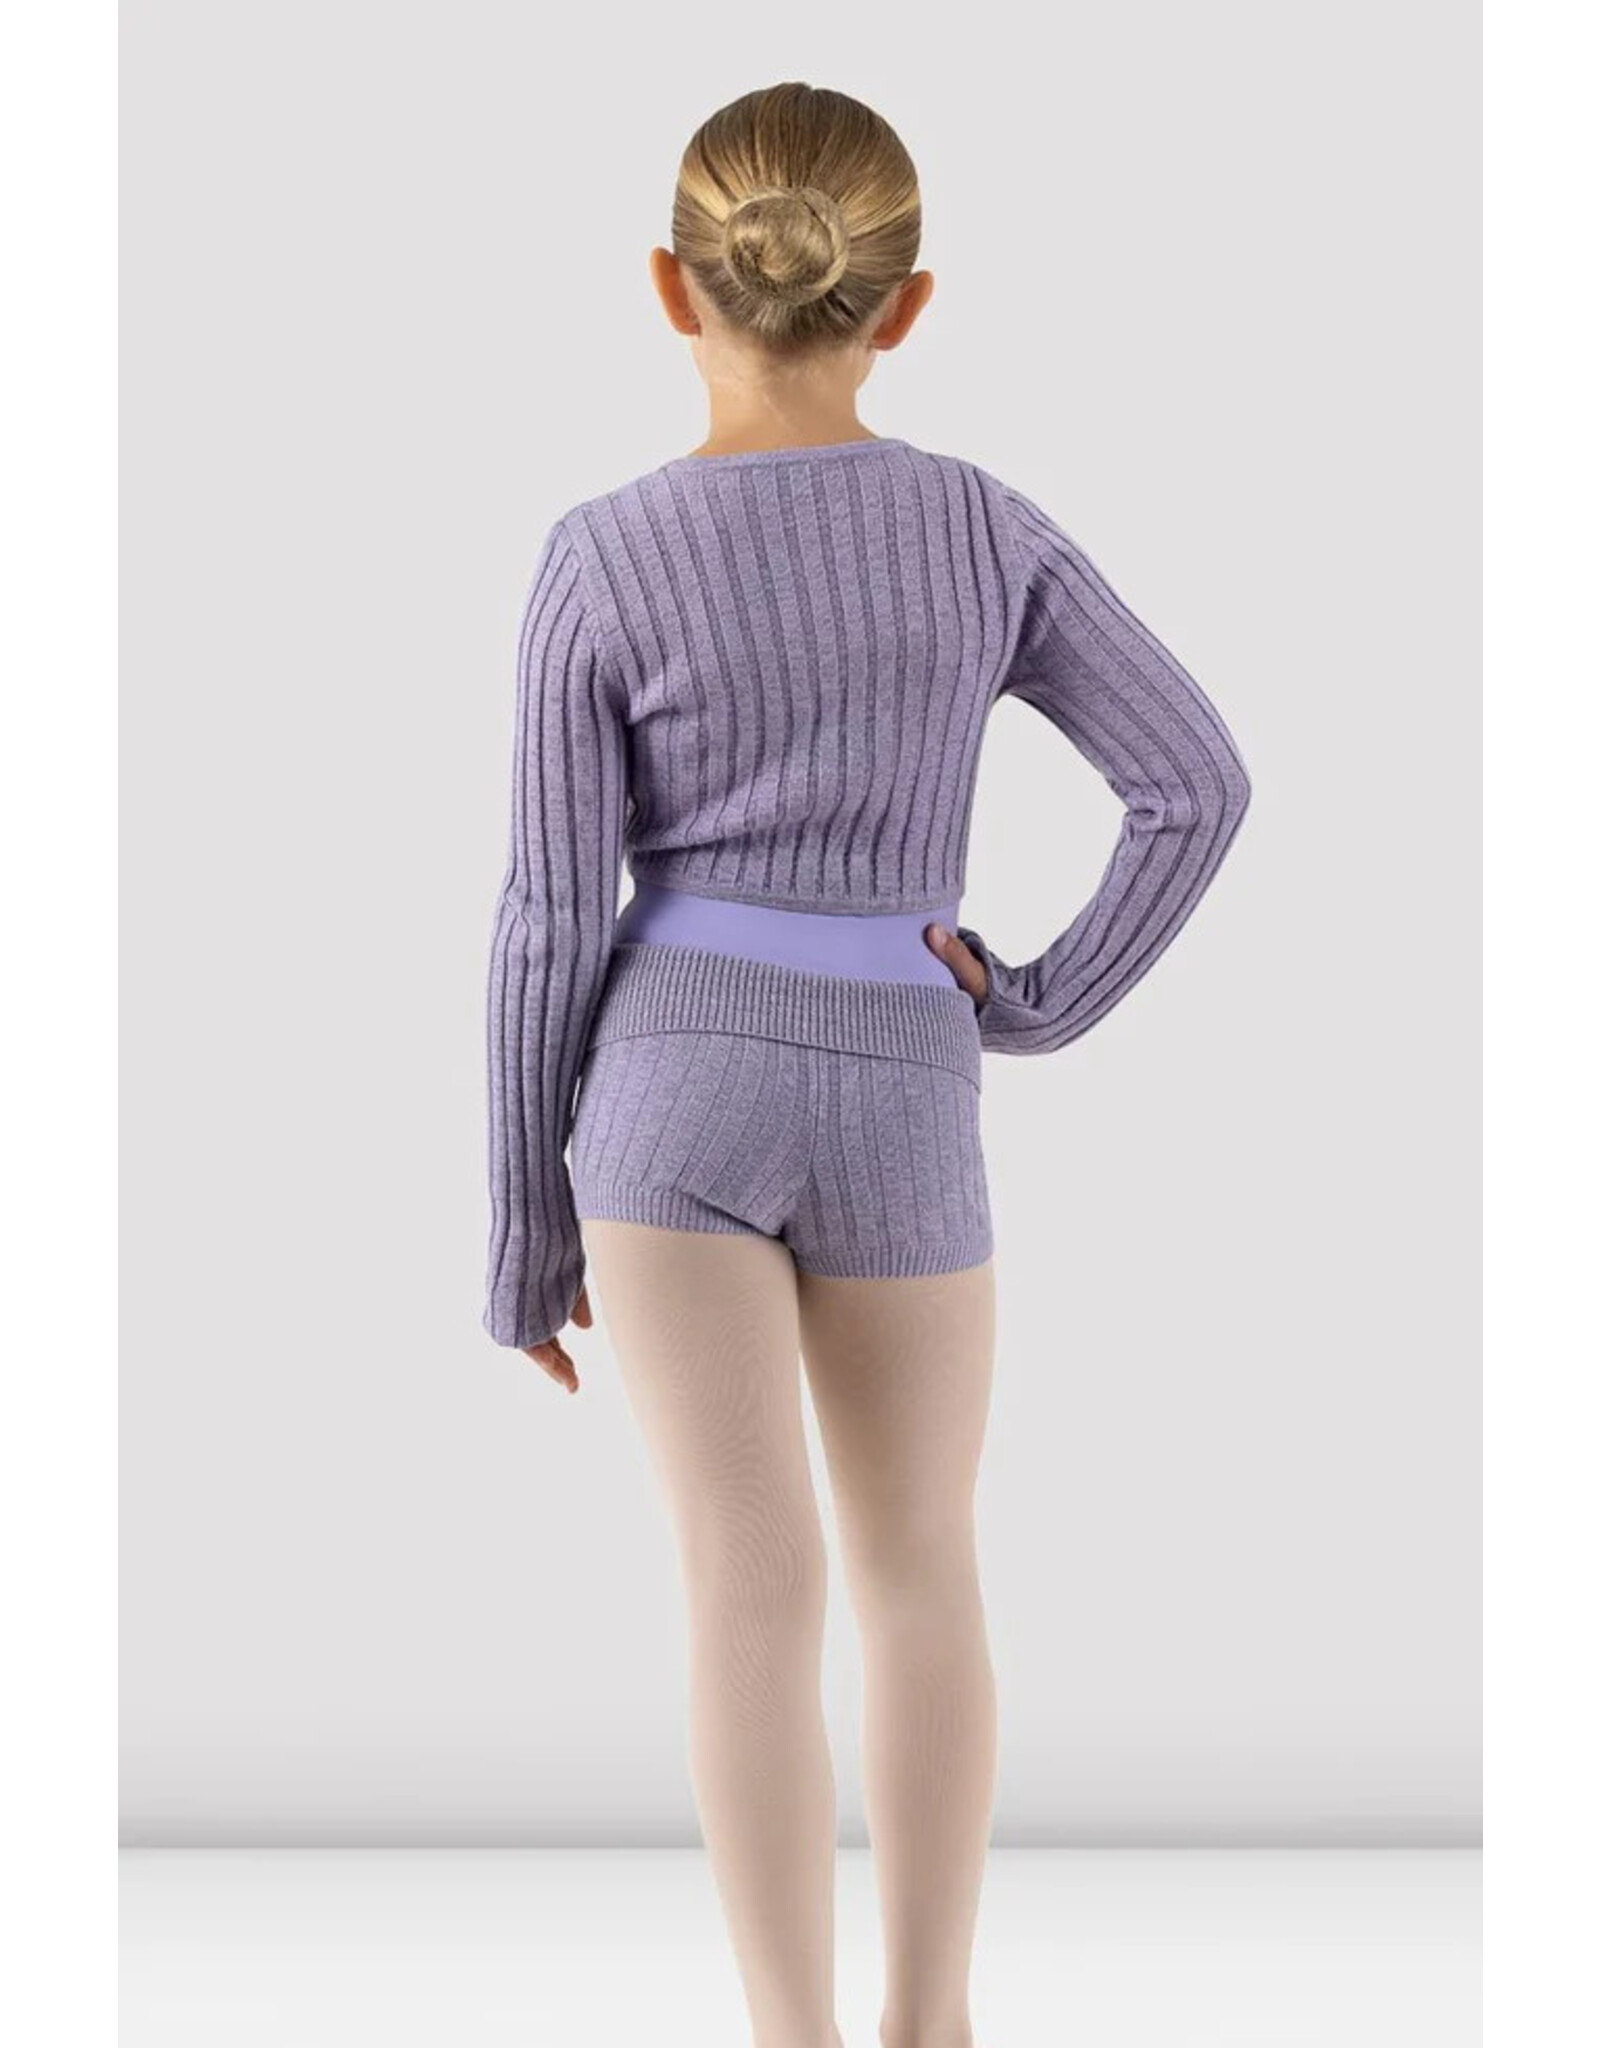 Bloch  Girls Lily Knit Shorts